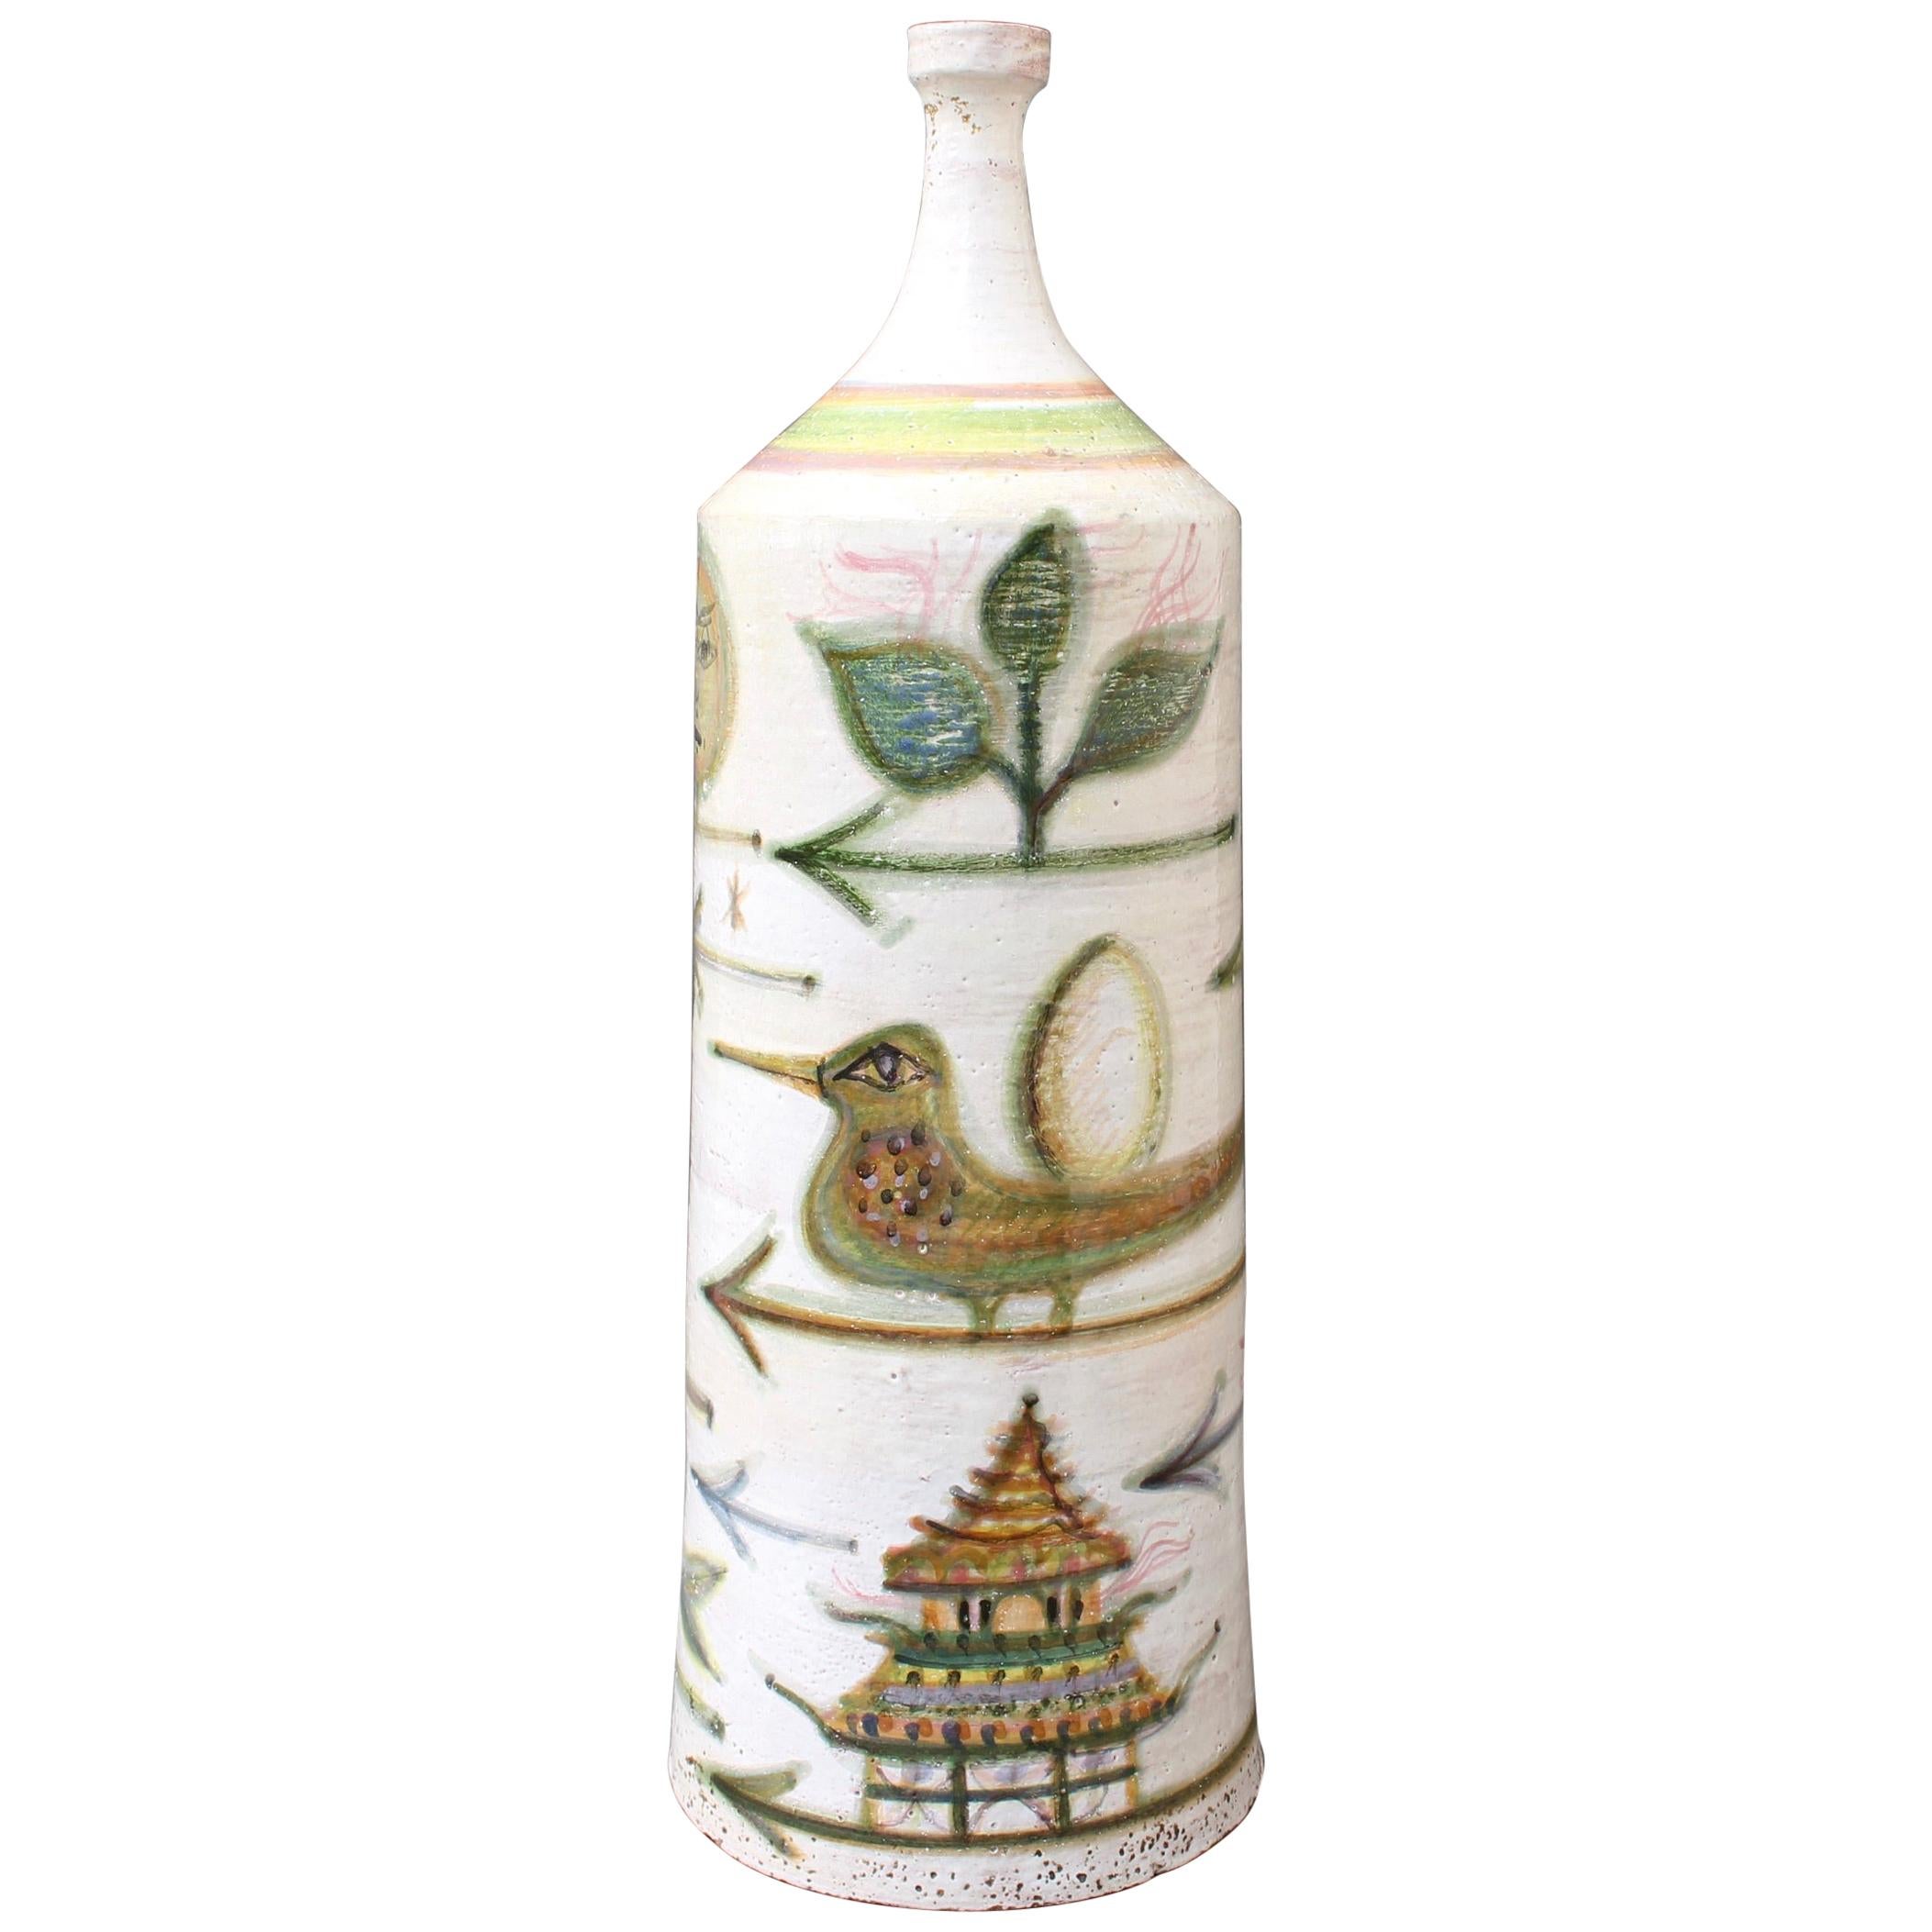 Decorative French Ceramic Bottle-Shaped Vase by David Sol, circa 1950s